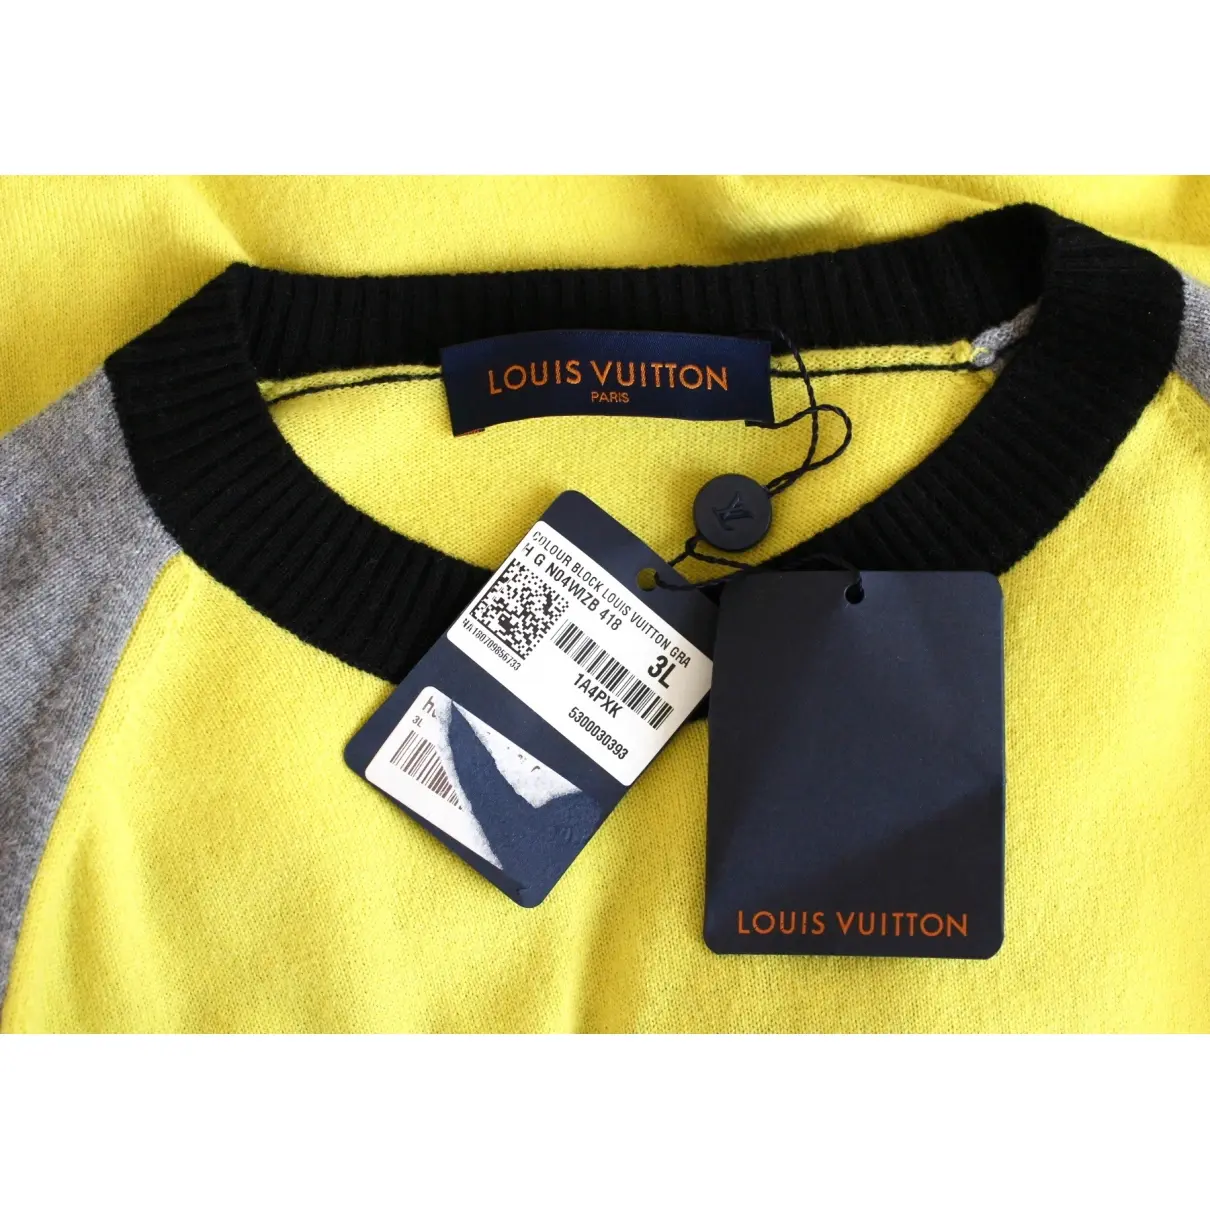 Buy Louis Vuitton Wool pull online